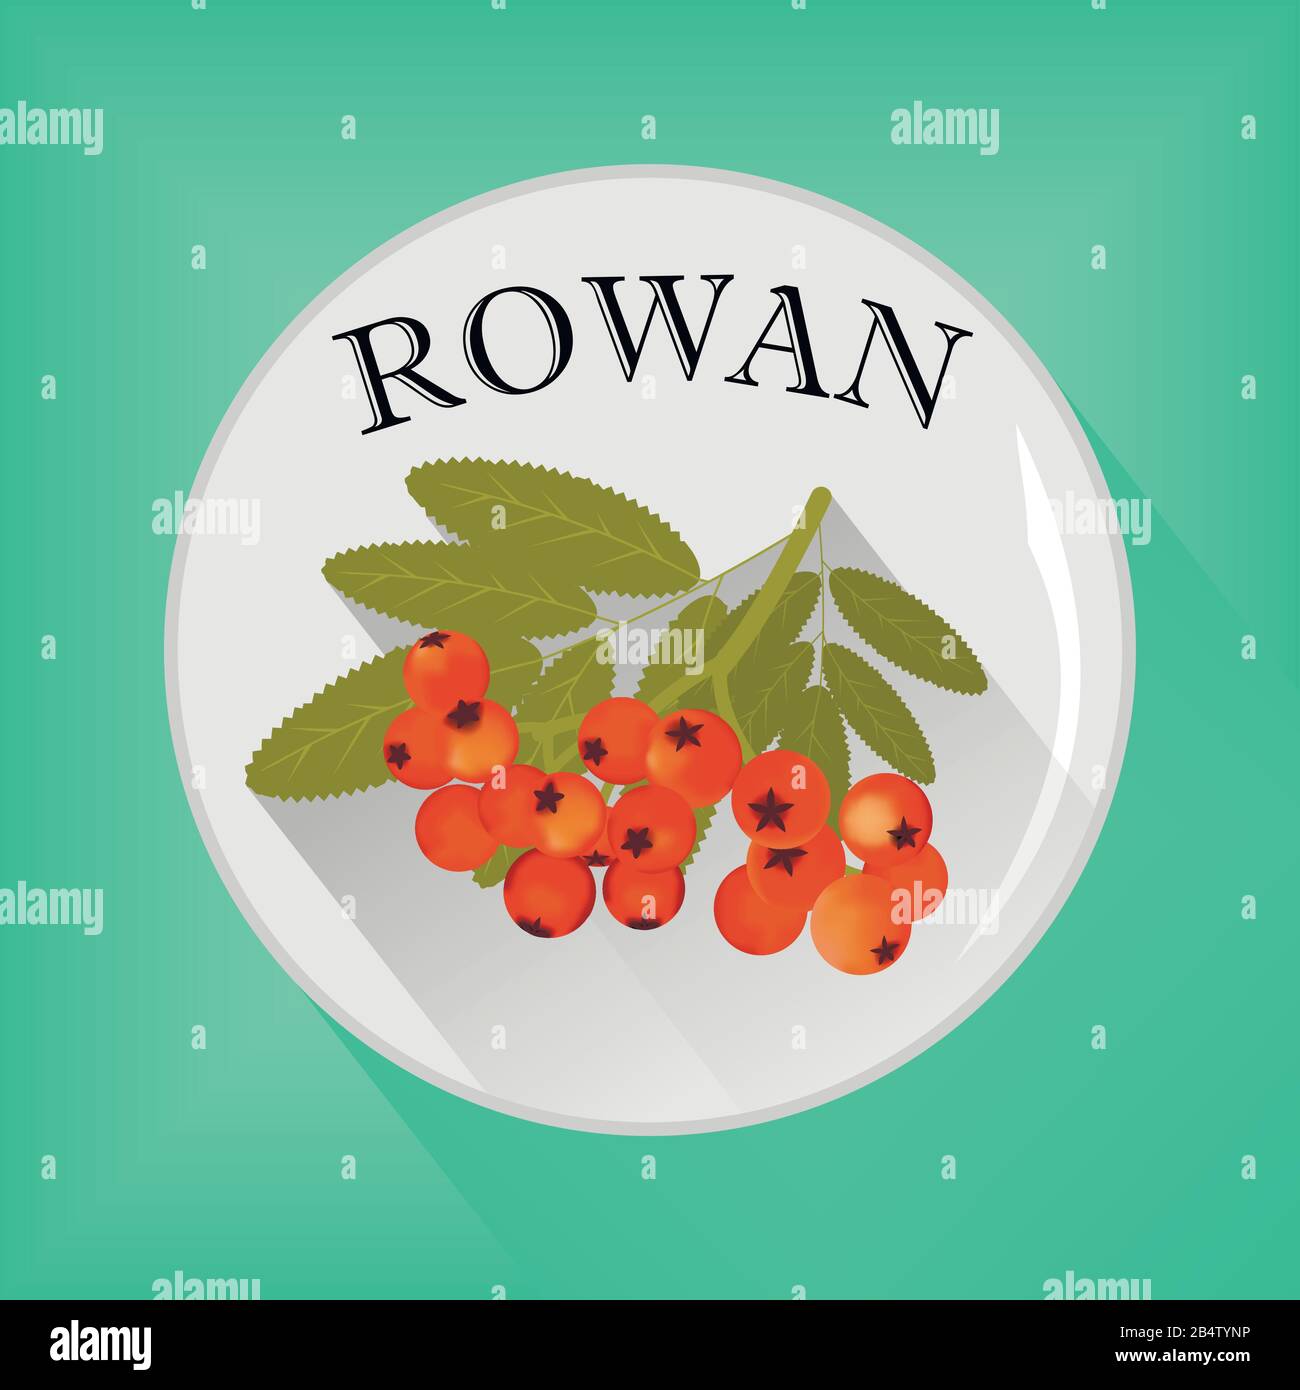 Rowan seasoning sticker flat icon vector image Stock Vector